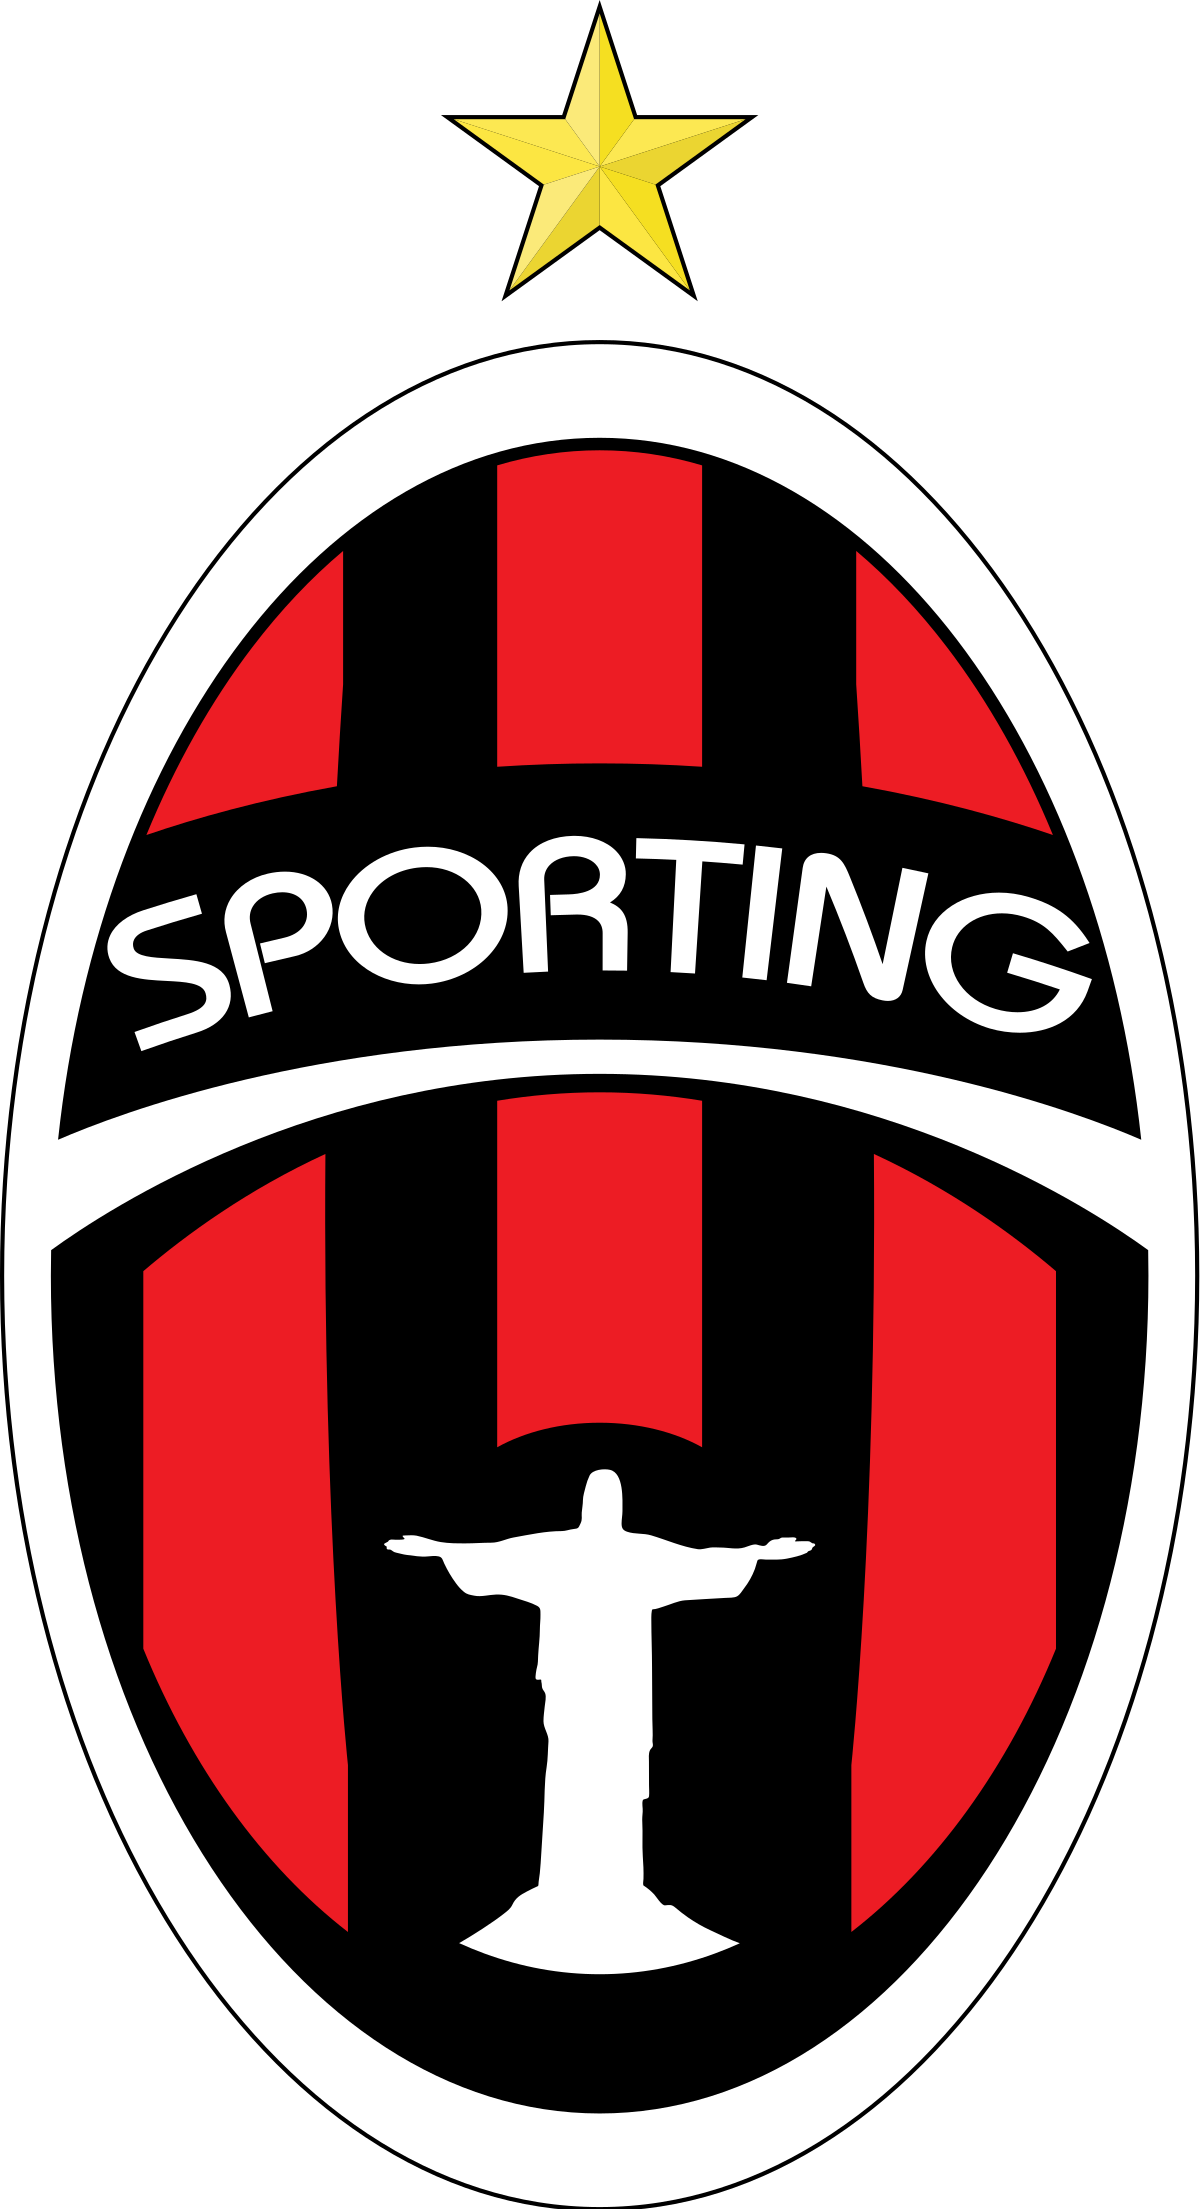 Sporting San Miguelito